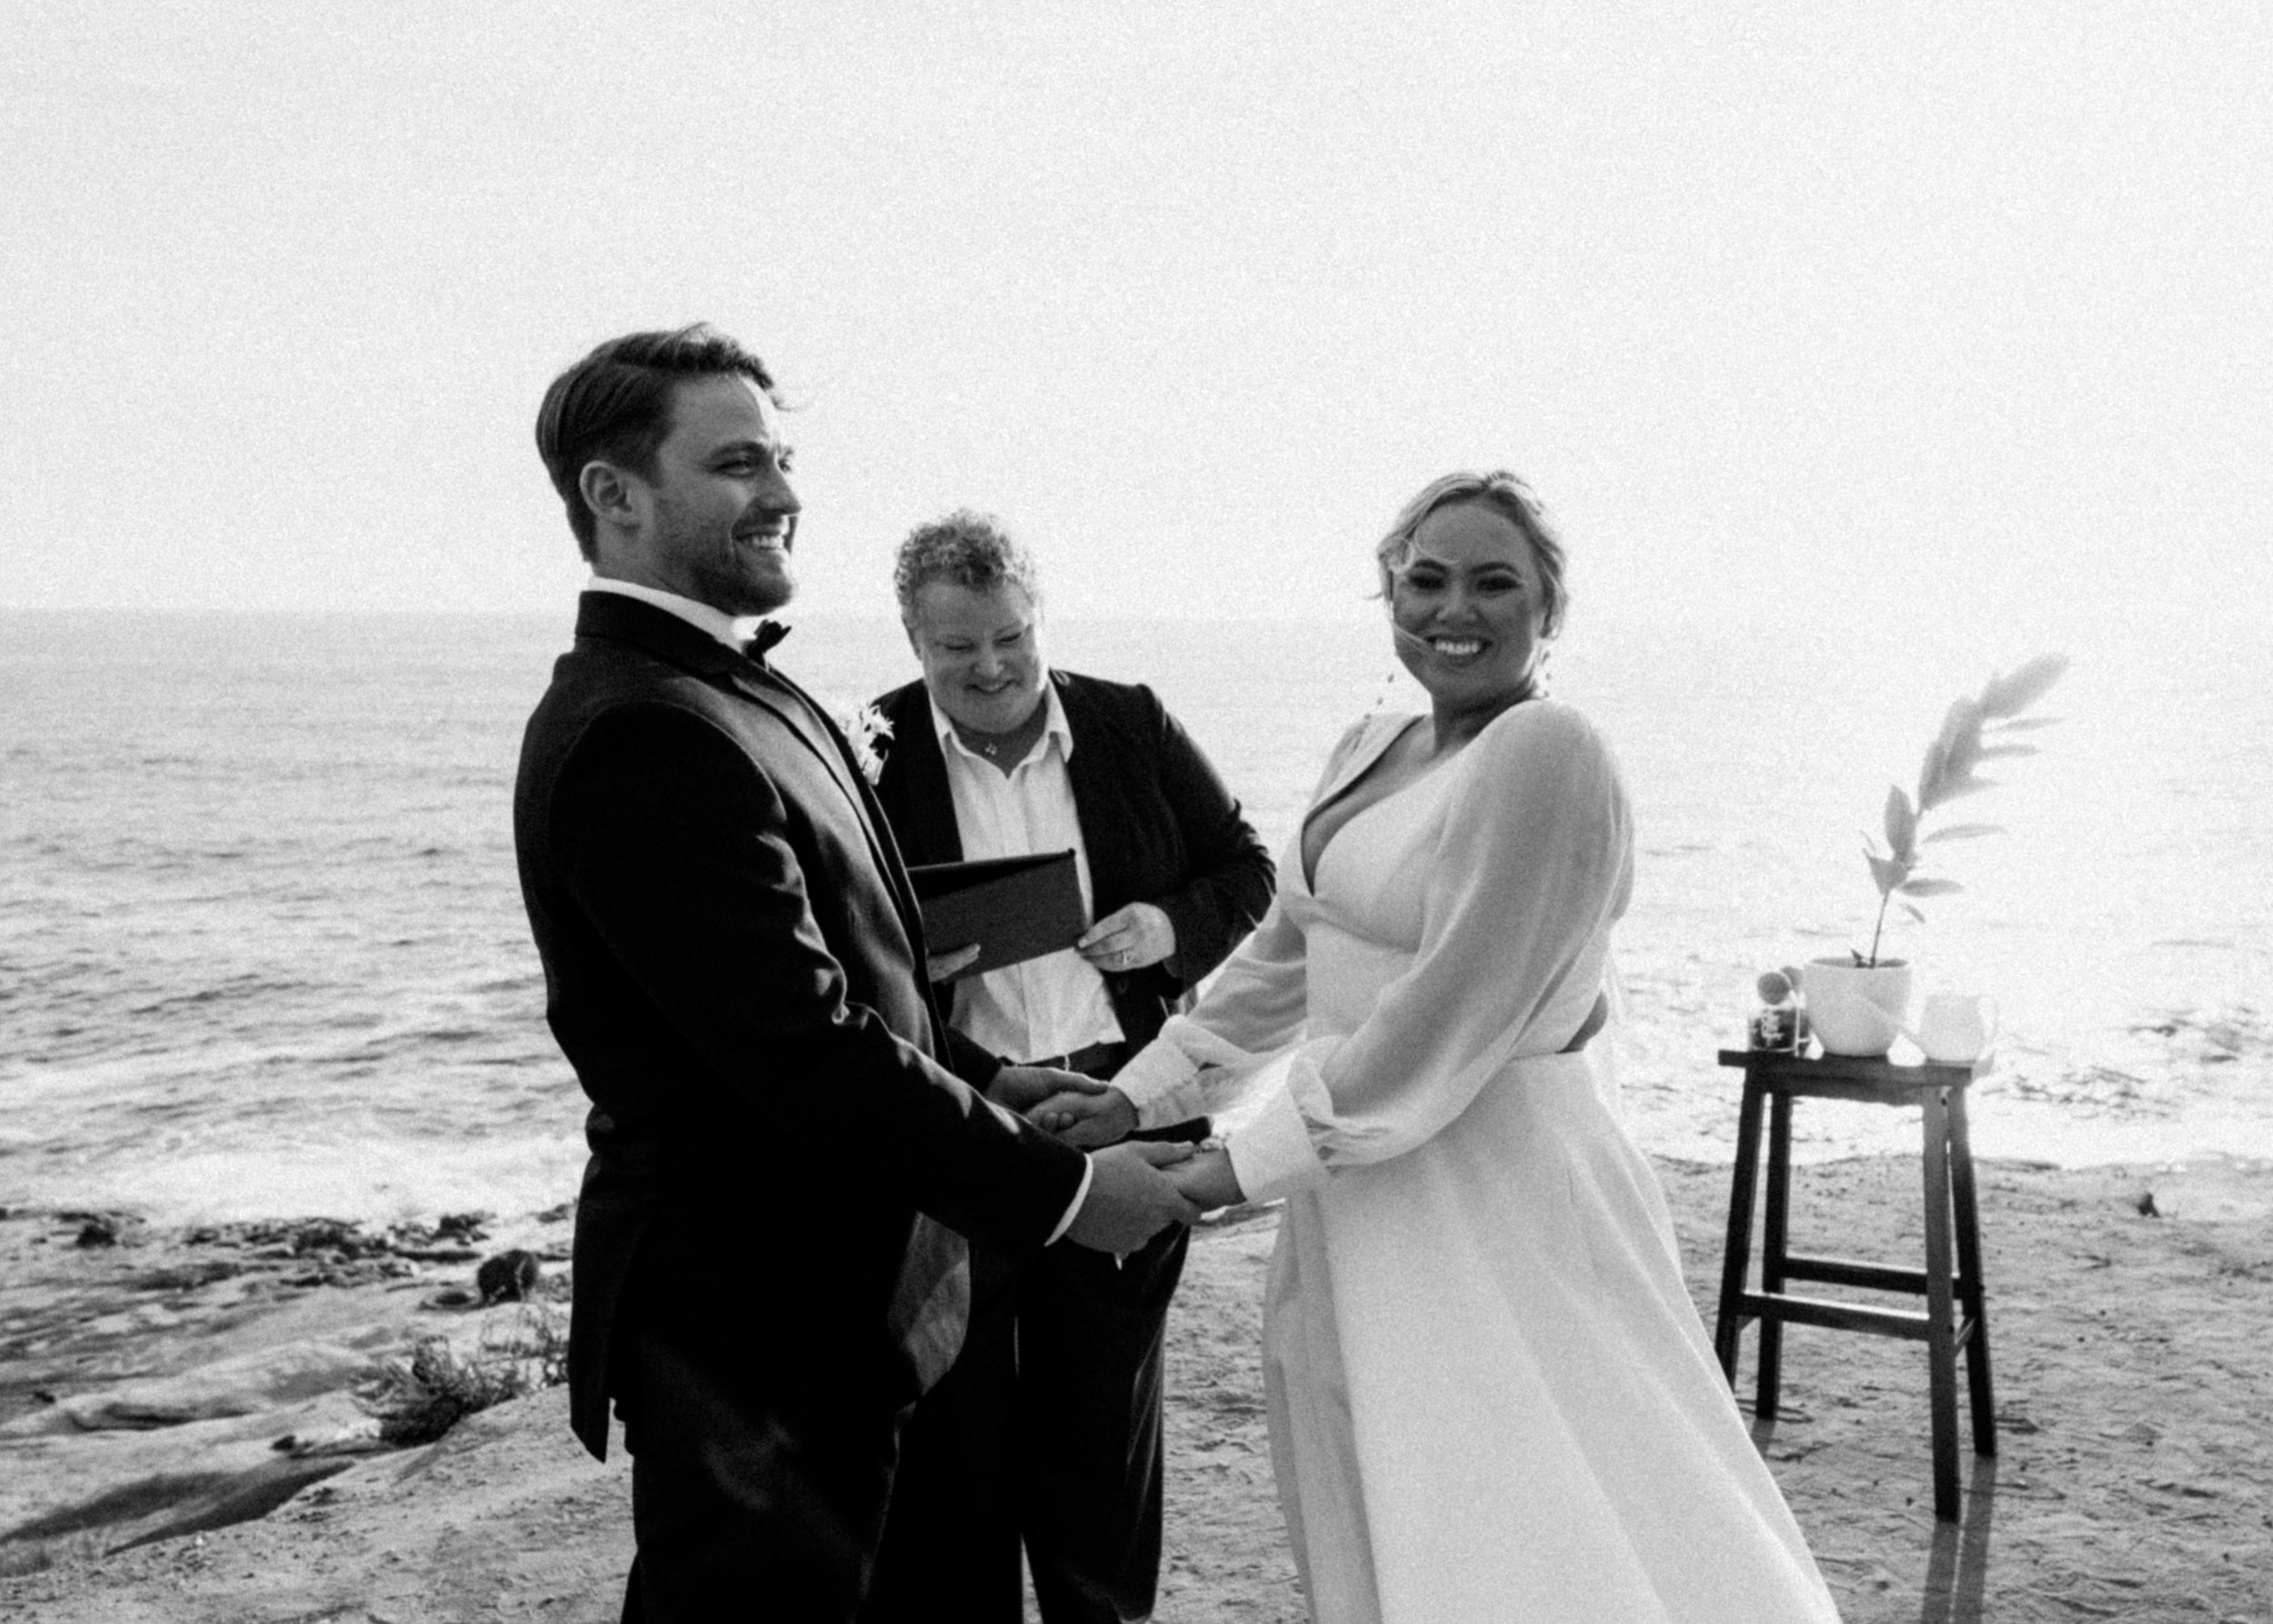 Intimate Coastal Destination Wedding | Destination Elopement Photographer | Italy Elopement | Positano Elopement | Italy wedding 